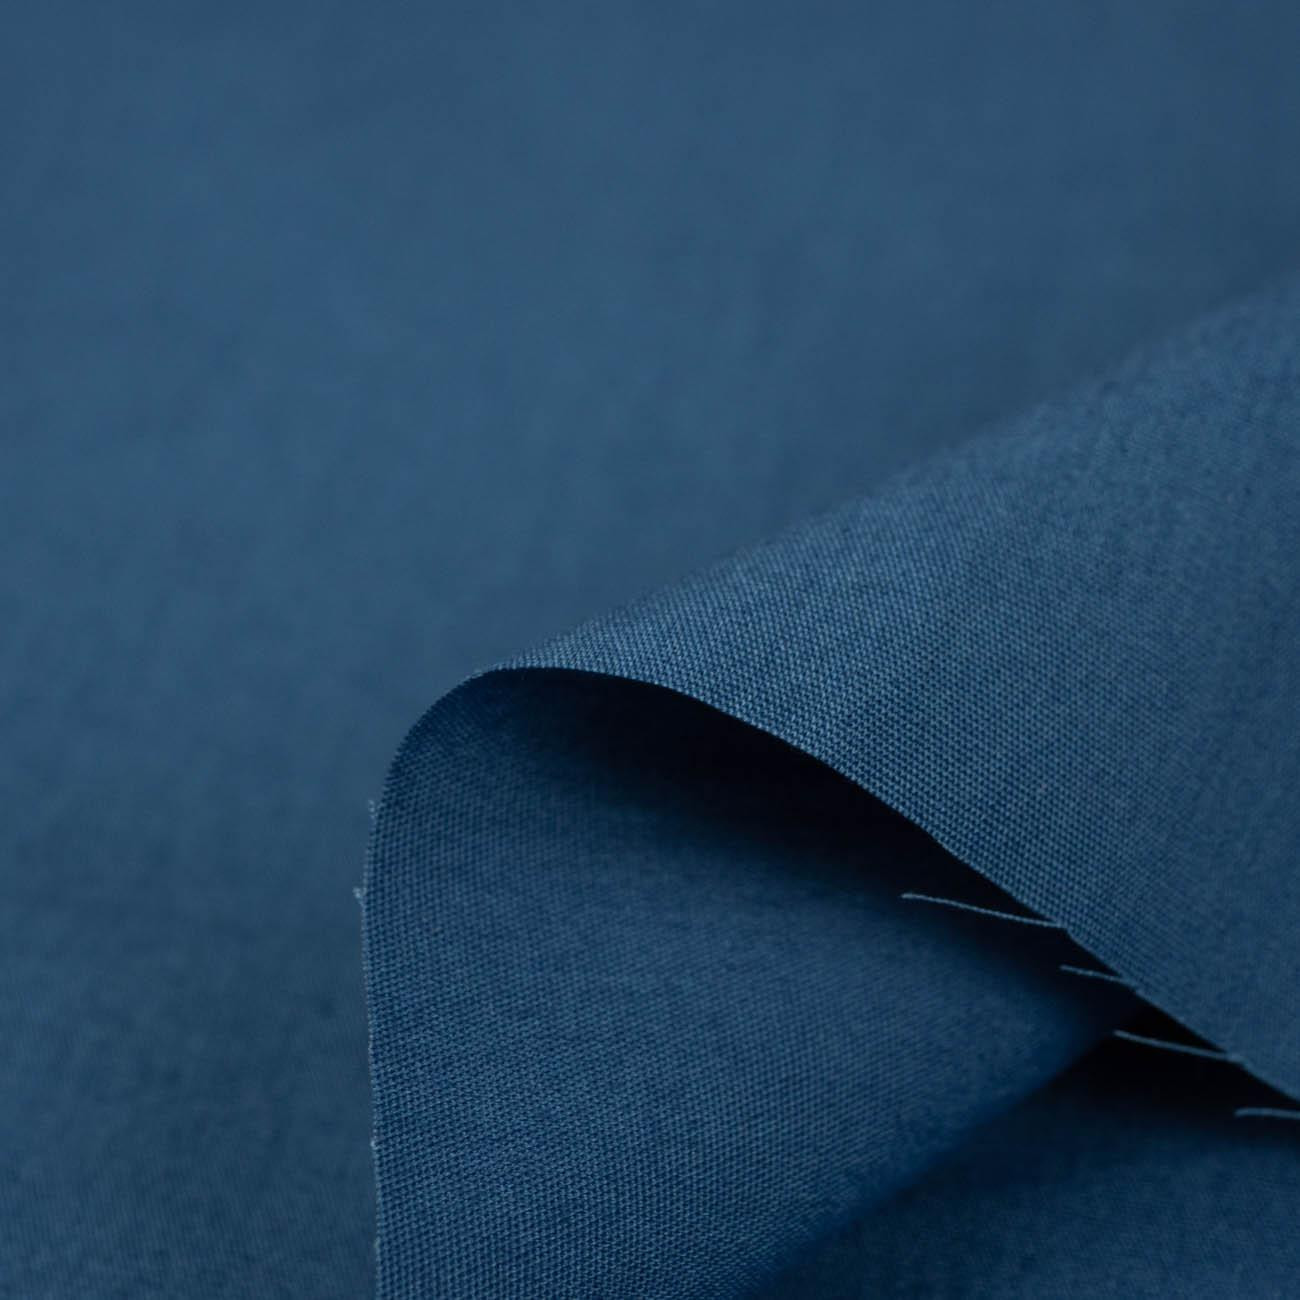 DARK BLUE - Cotton woven fabric